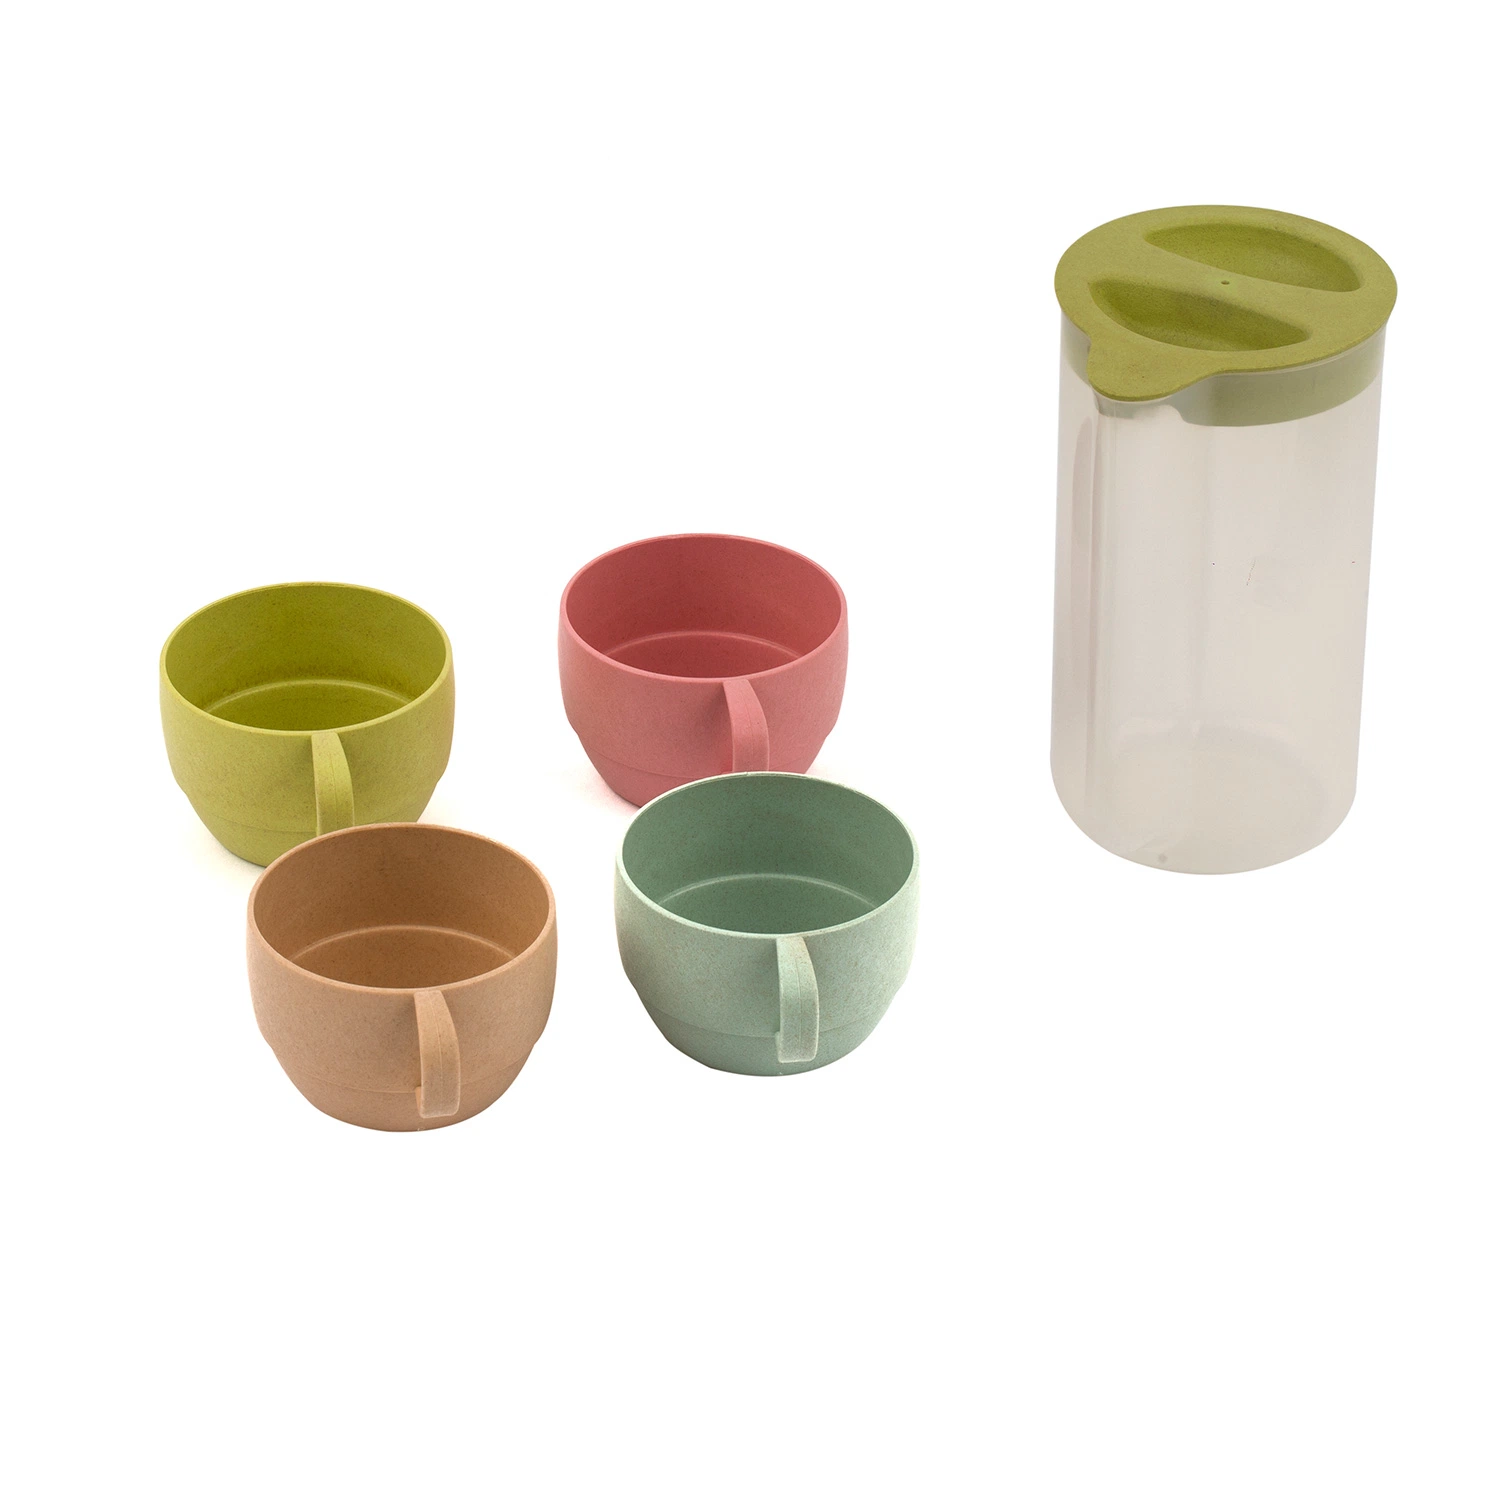 Plastic Coffee Mugs Cups Set with Bonus Jug, Handle Mugs for Cocoa, Tea, Coffee (4 Mugs Set)